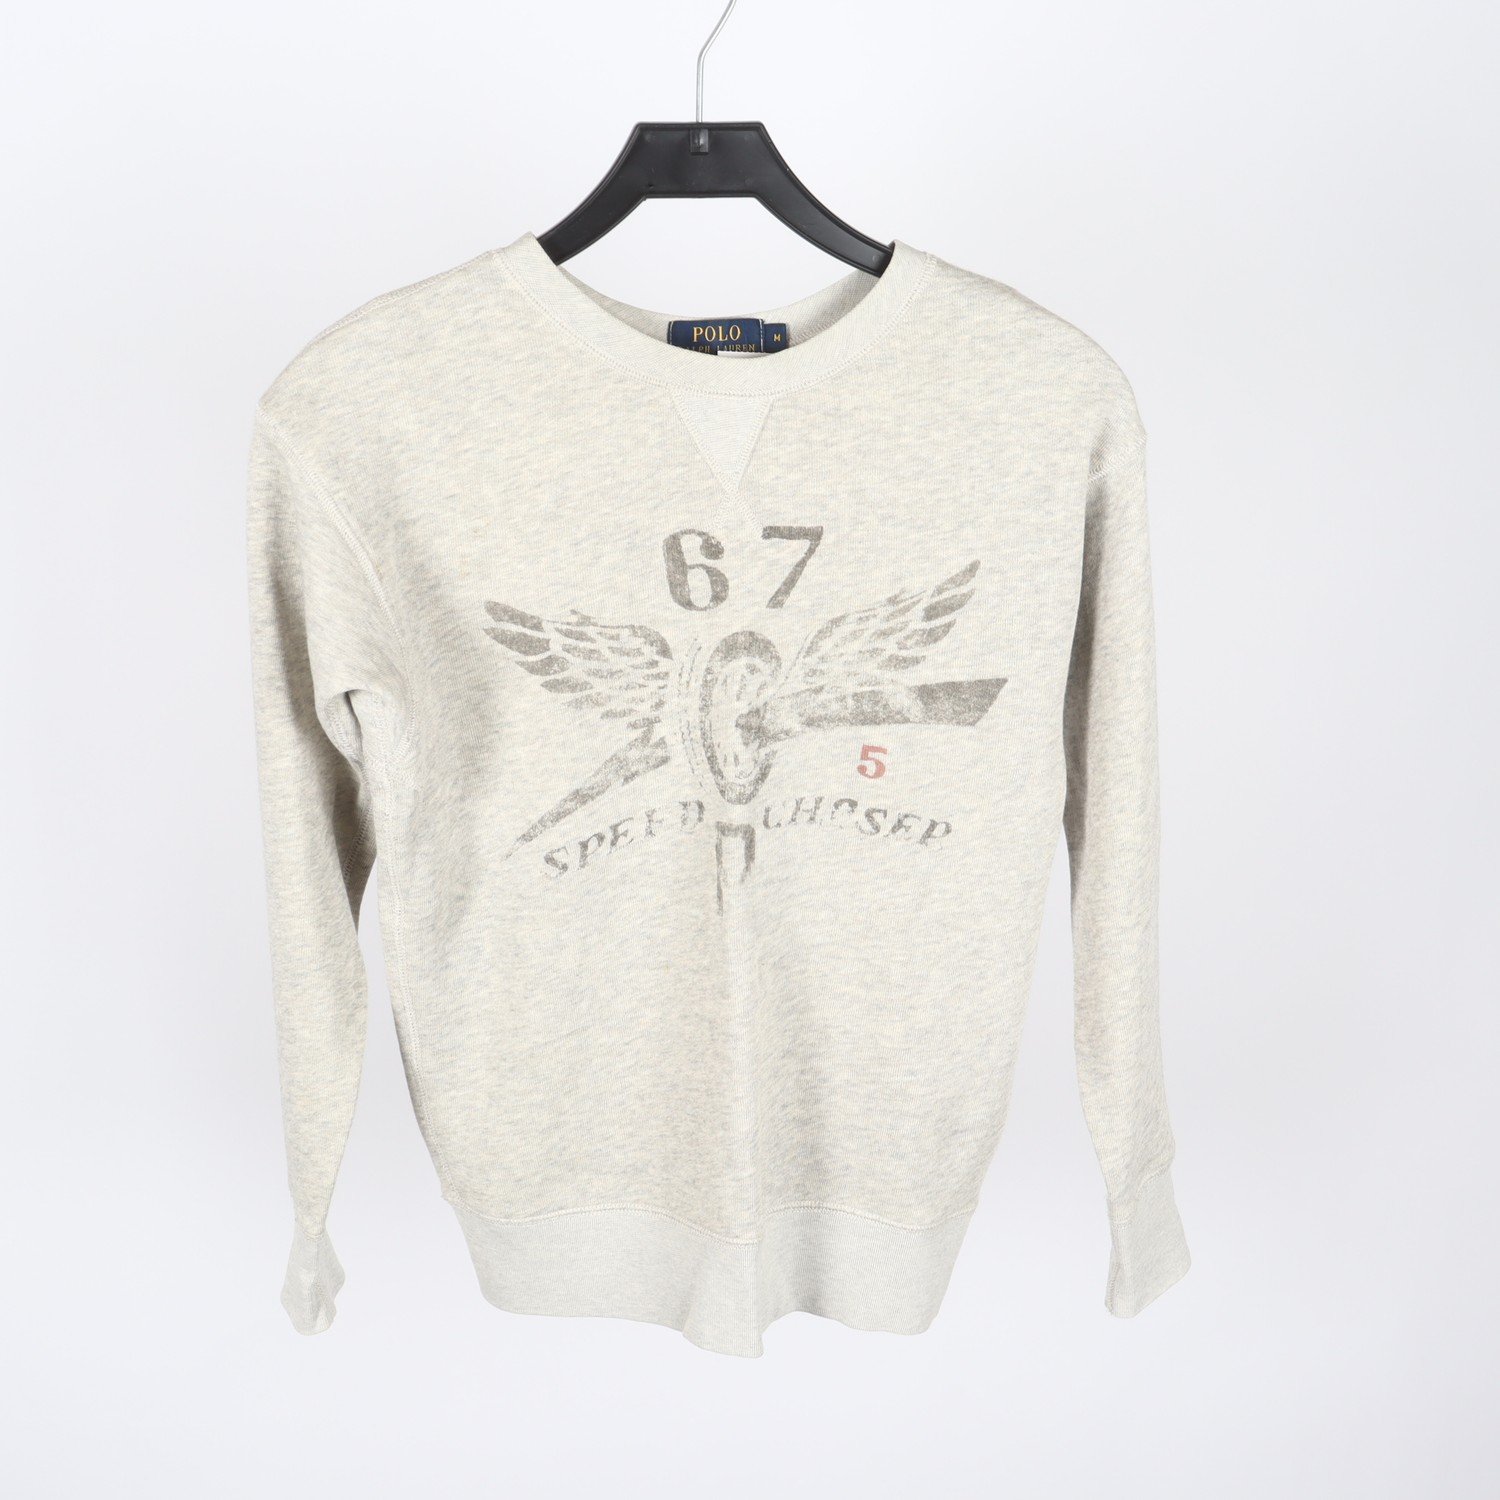 Sweatshirt, Ralph Lauren, grå, stl. M